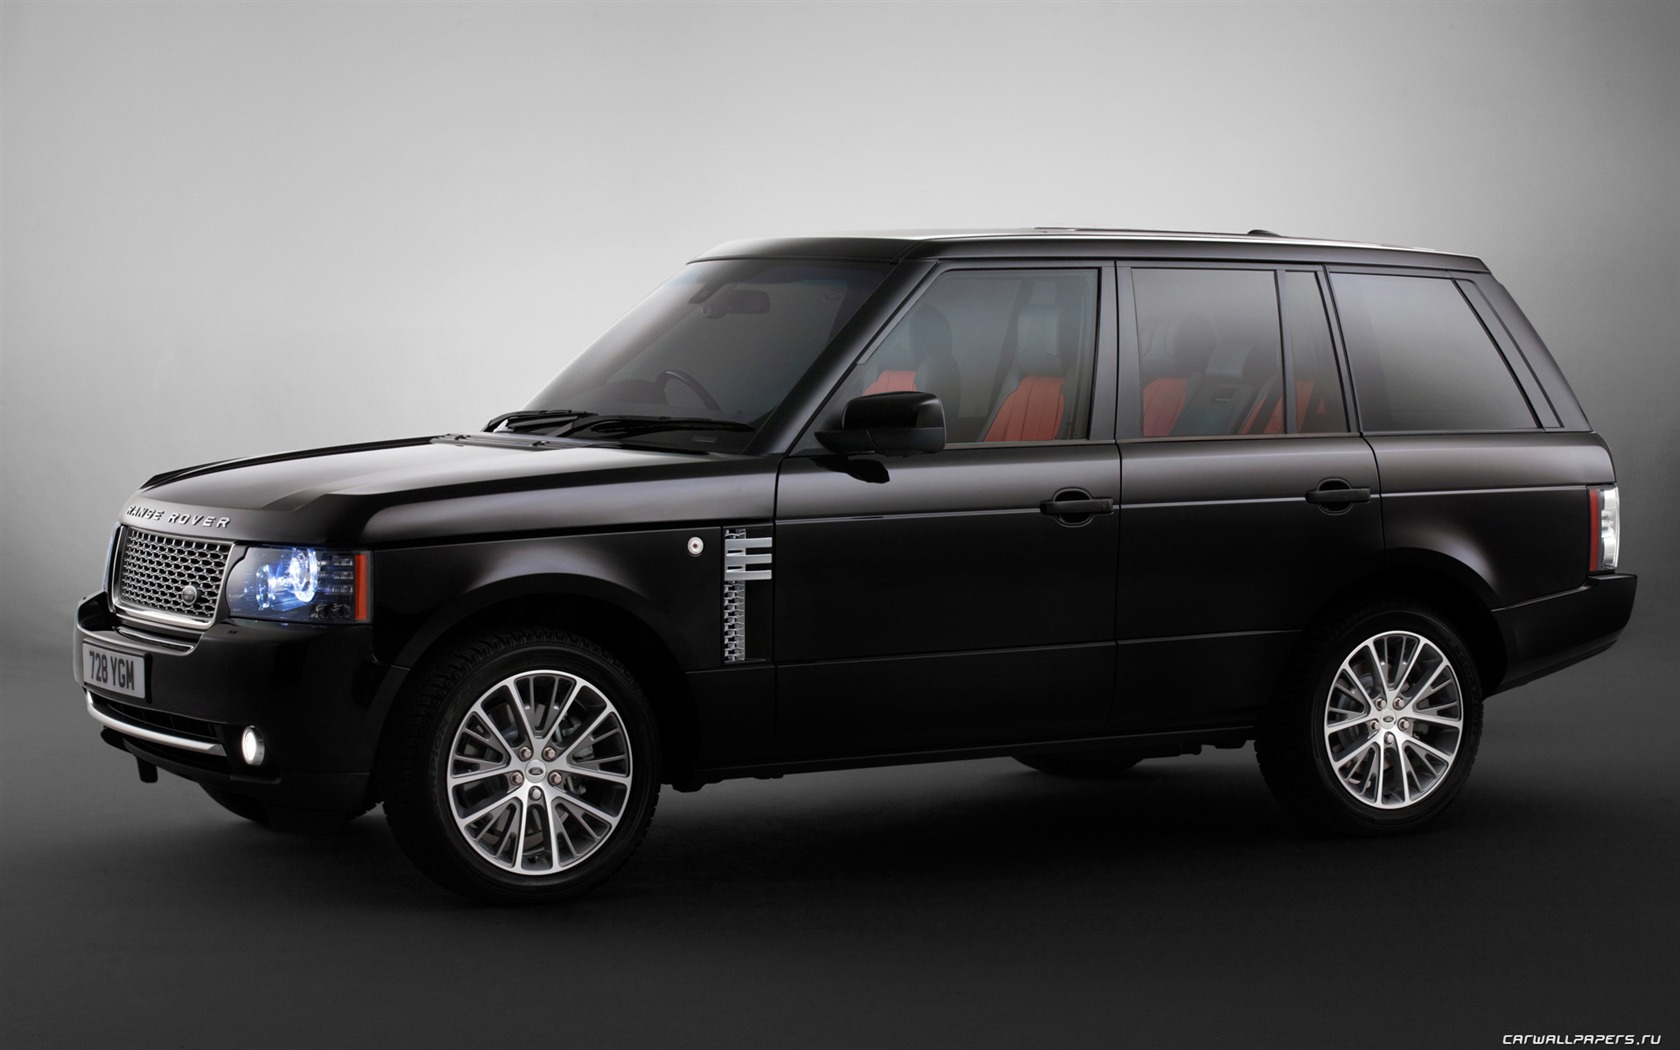 Land Rover Range Rover Black Edition - 2011 路虎17 - 1680x1050